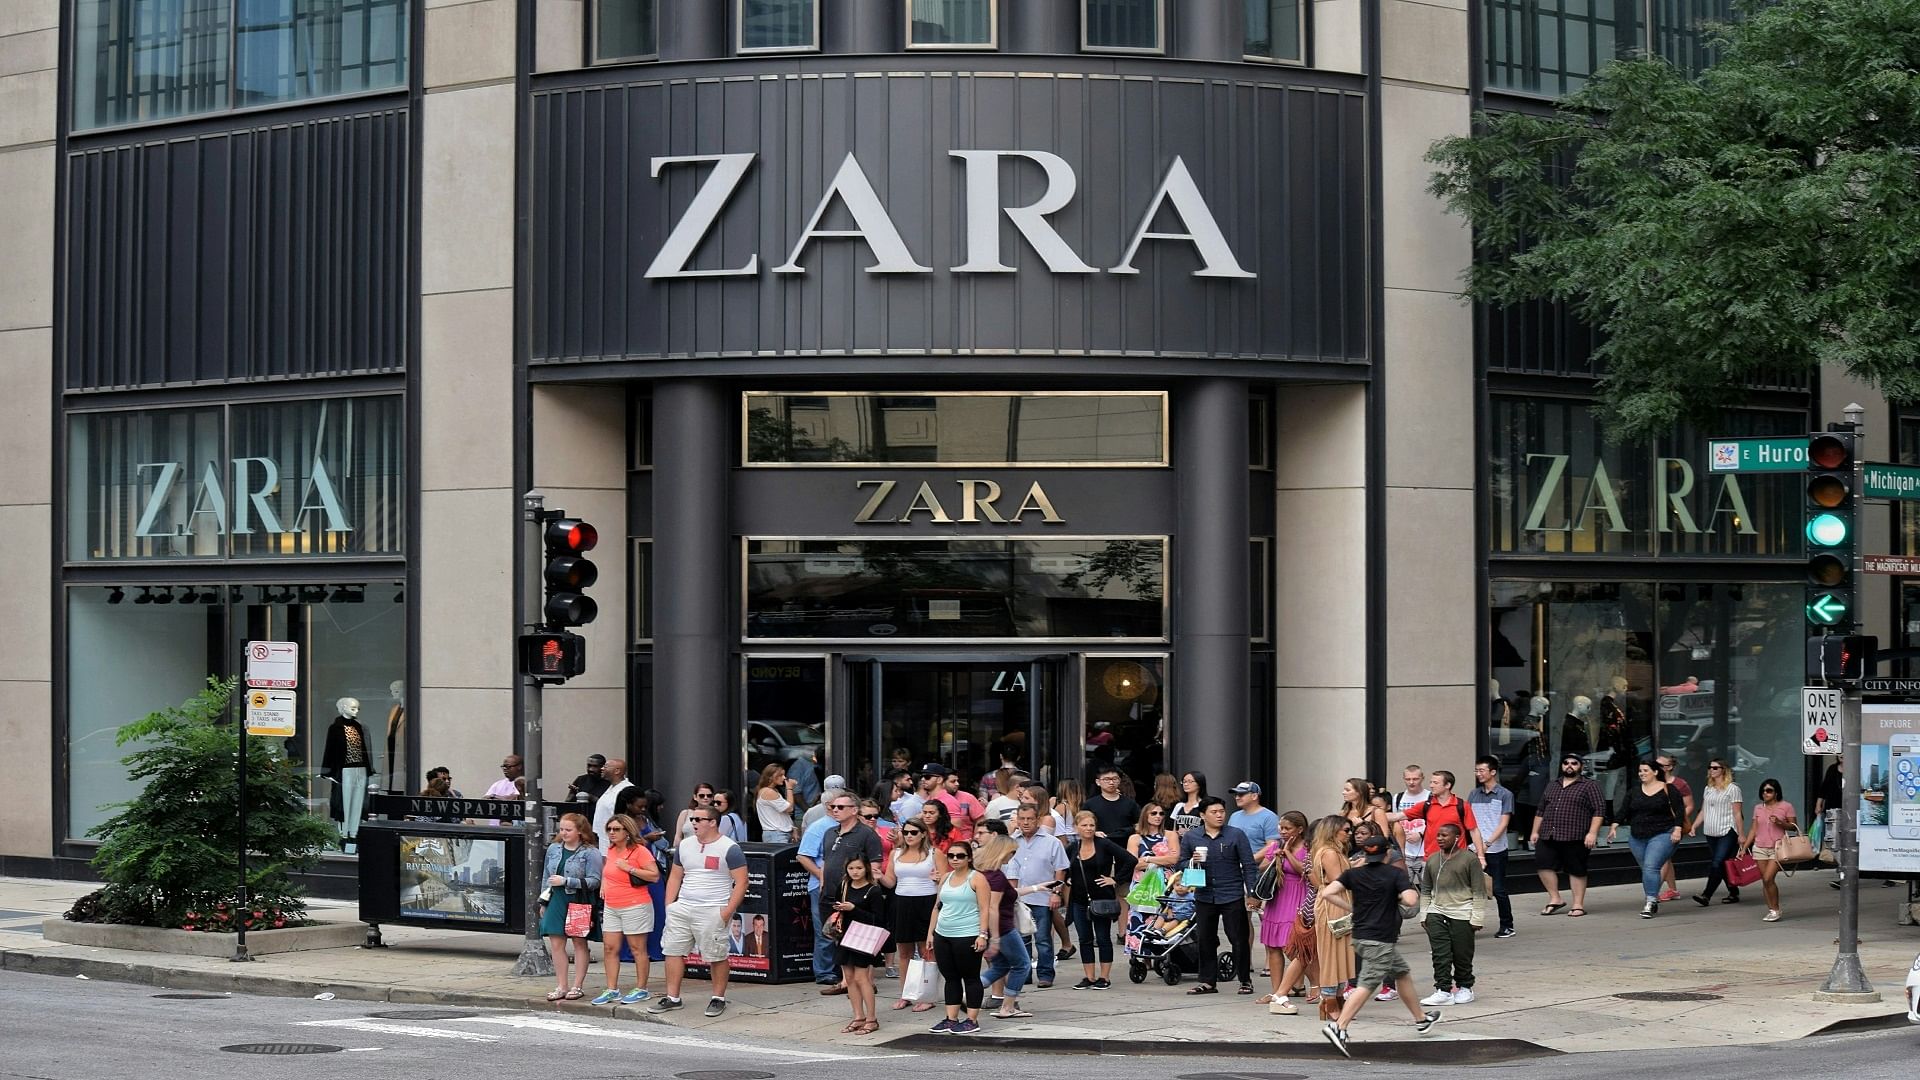 zara: Fashion brands H&M, Primark & Zara owner accused of